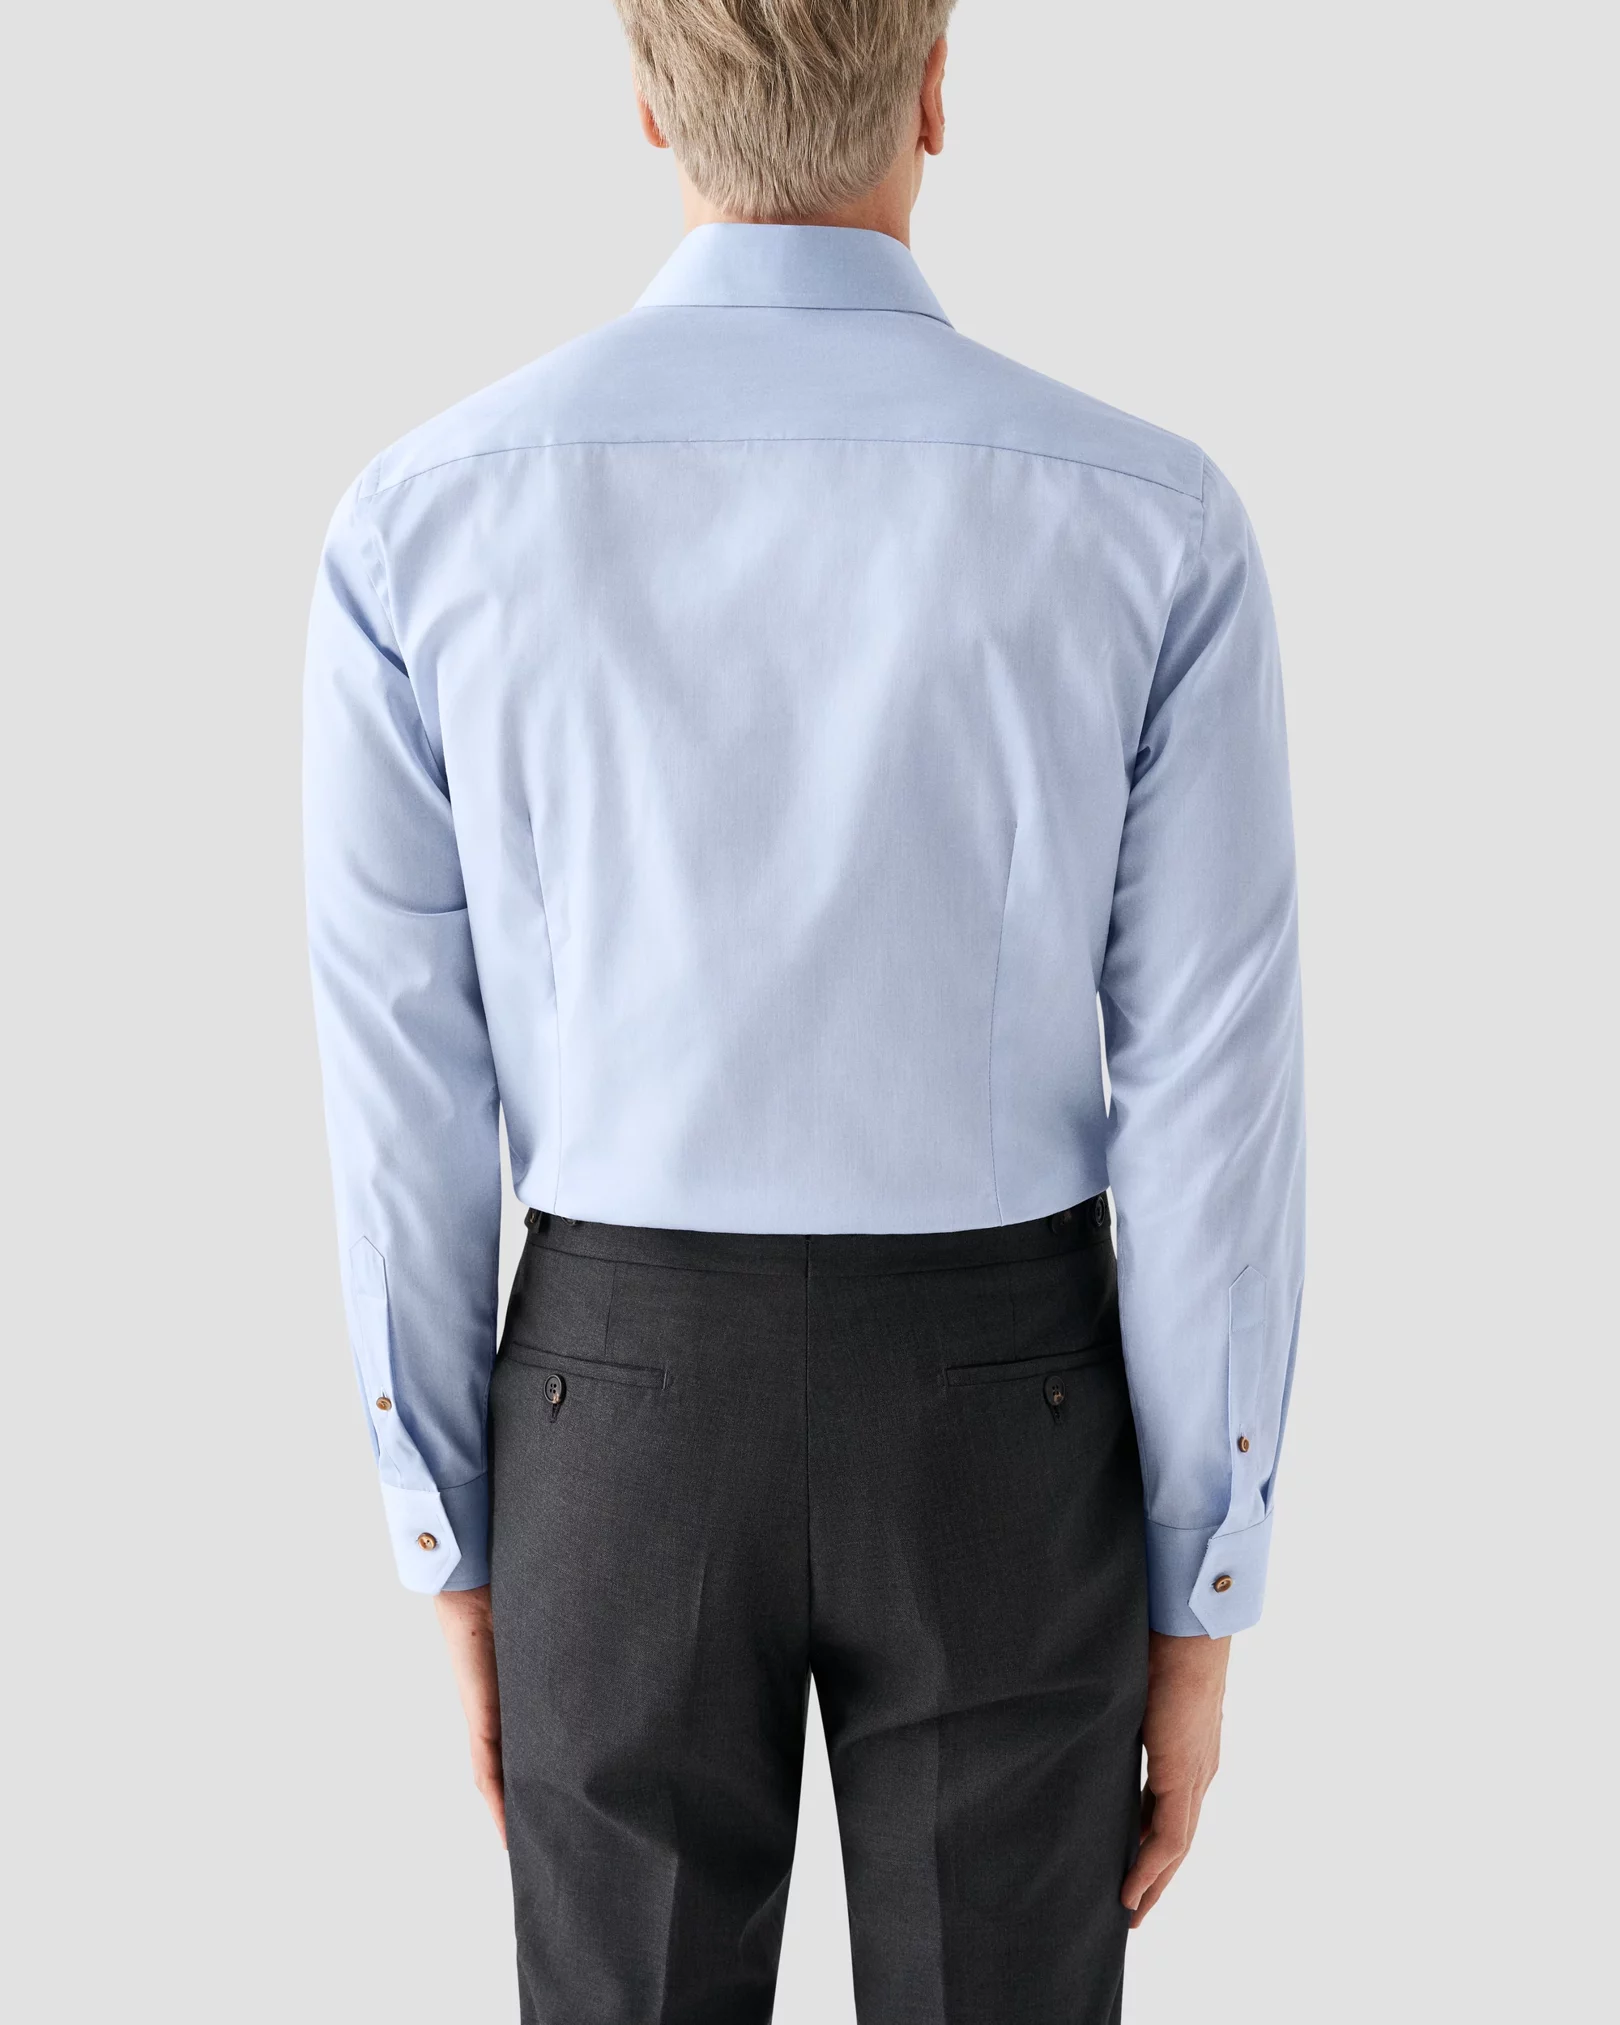 Eton - light blue contrast shirt